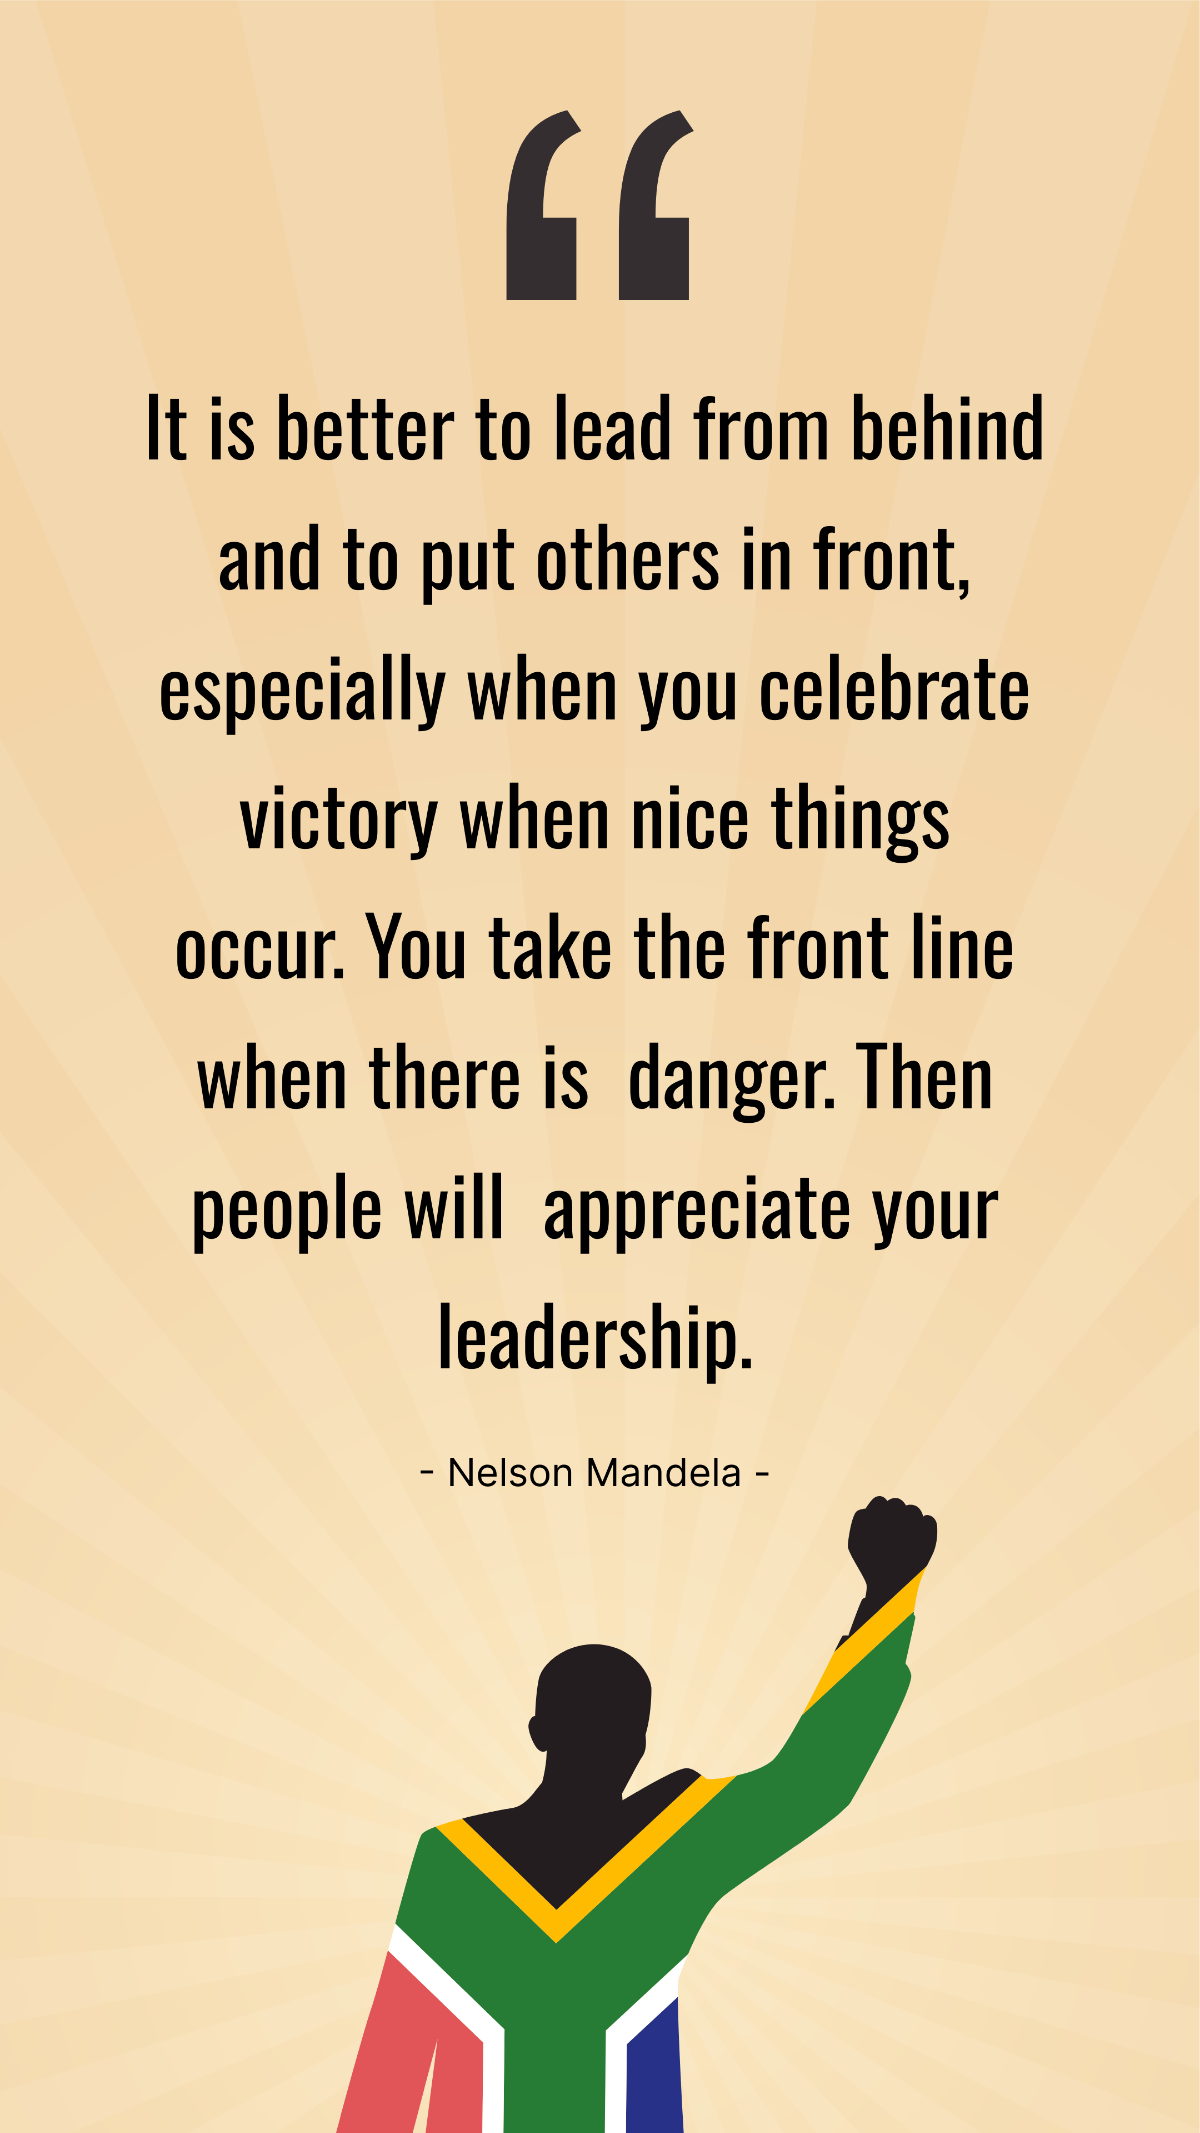 Nelson Mandela Quote on Leadership